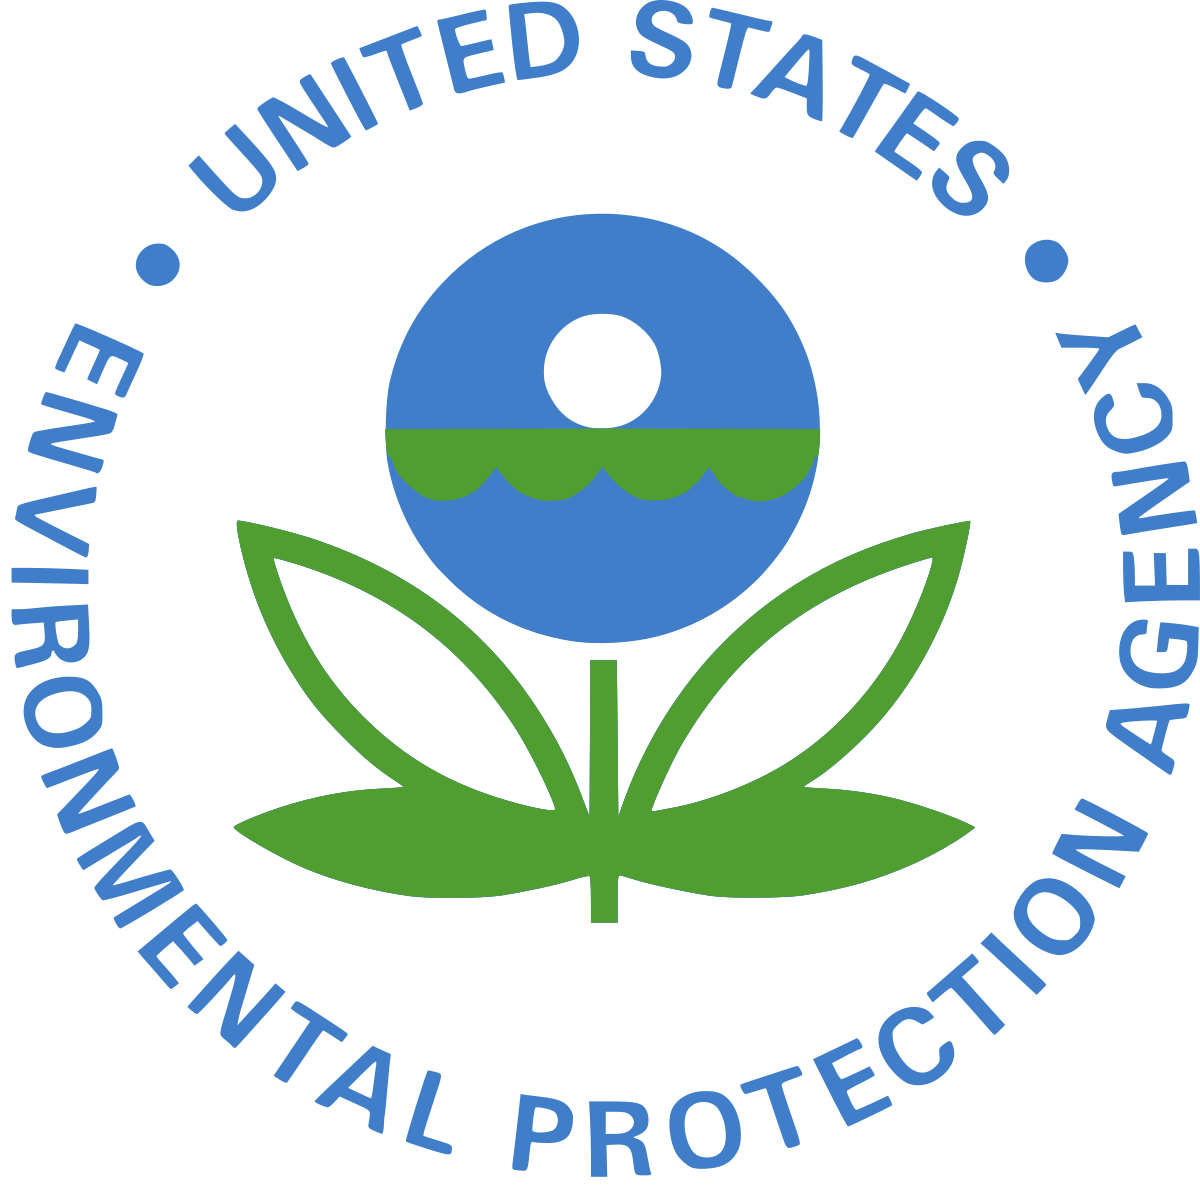 US Environmental Protection Agency logo